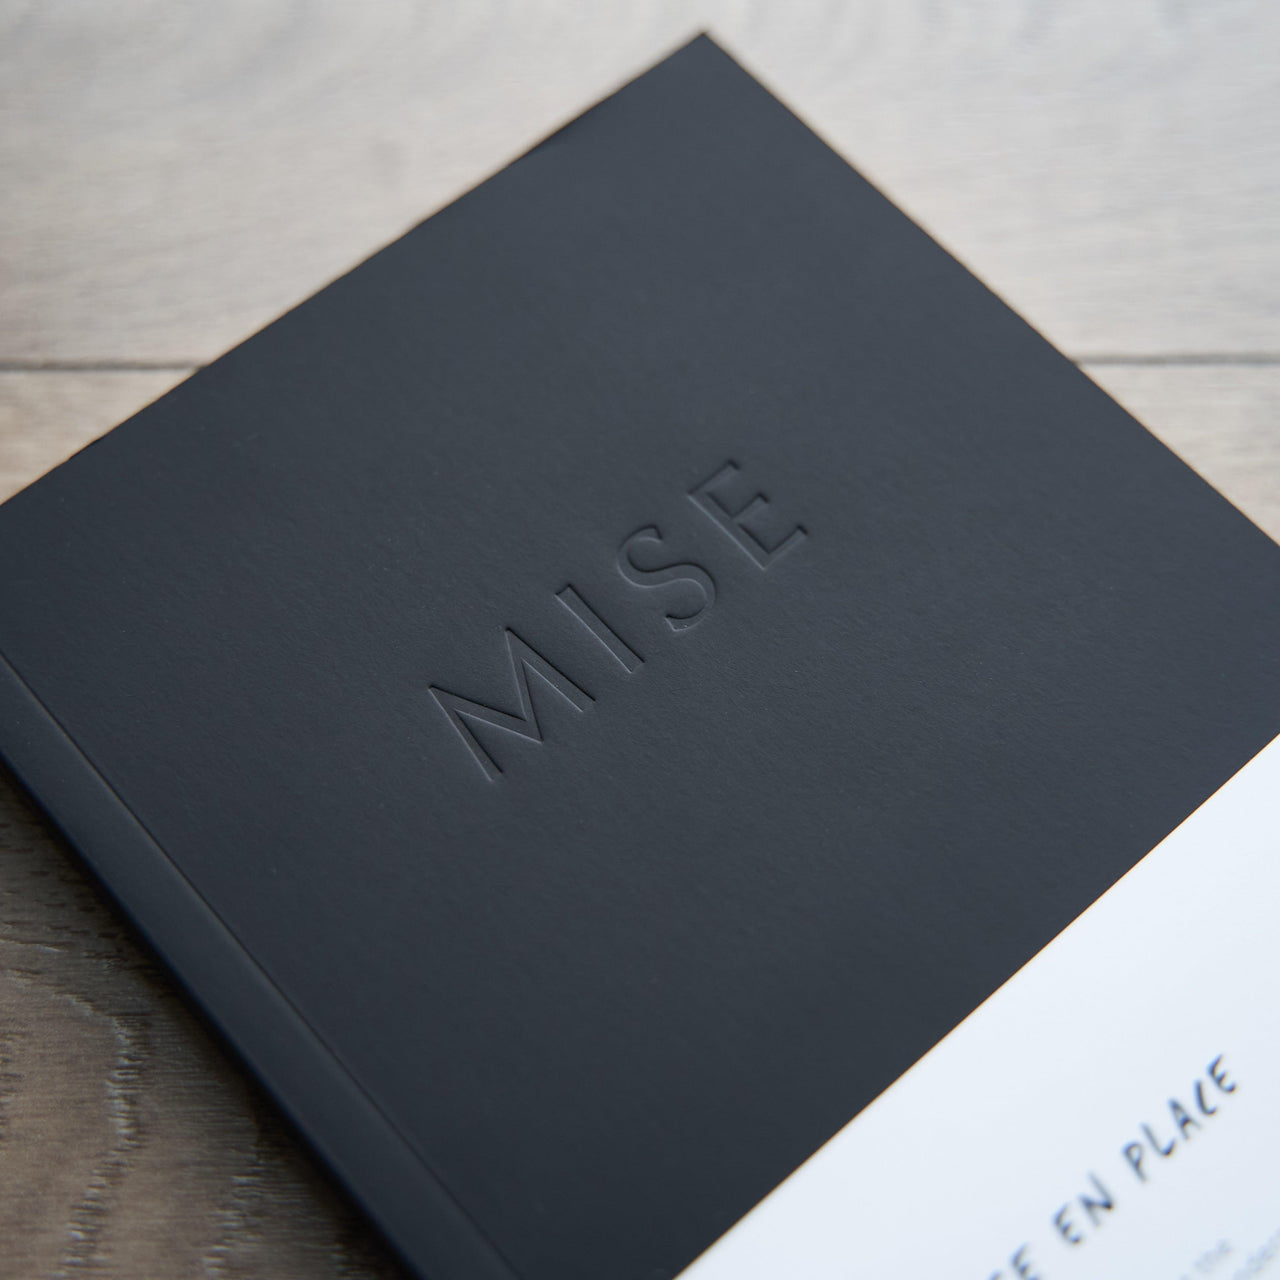 Mental Mise En Place Journal-Books-Chef Philip Speer-Carbon Knife Co